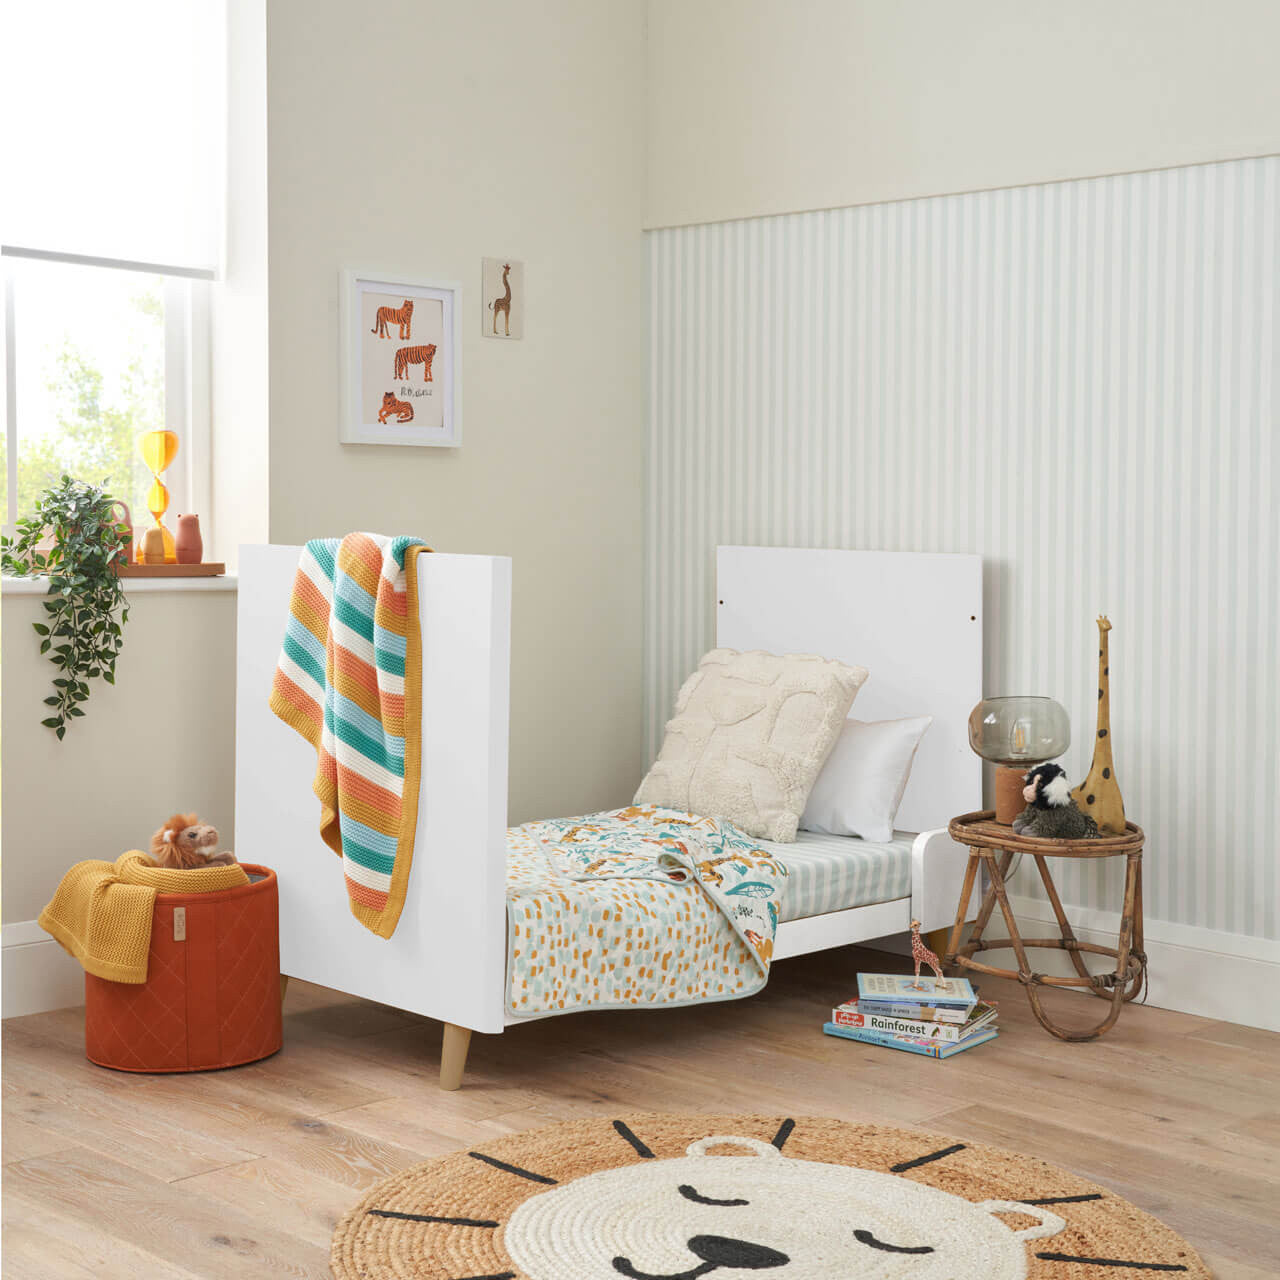 Tutti Bambini Fika Mini Cot Bed - White Sand/Light Oak -  | For Your Little One